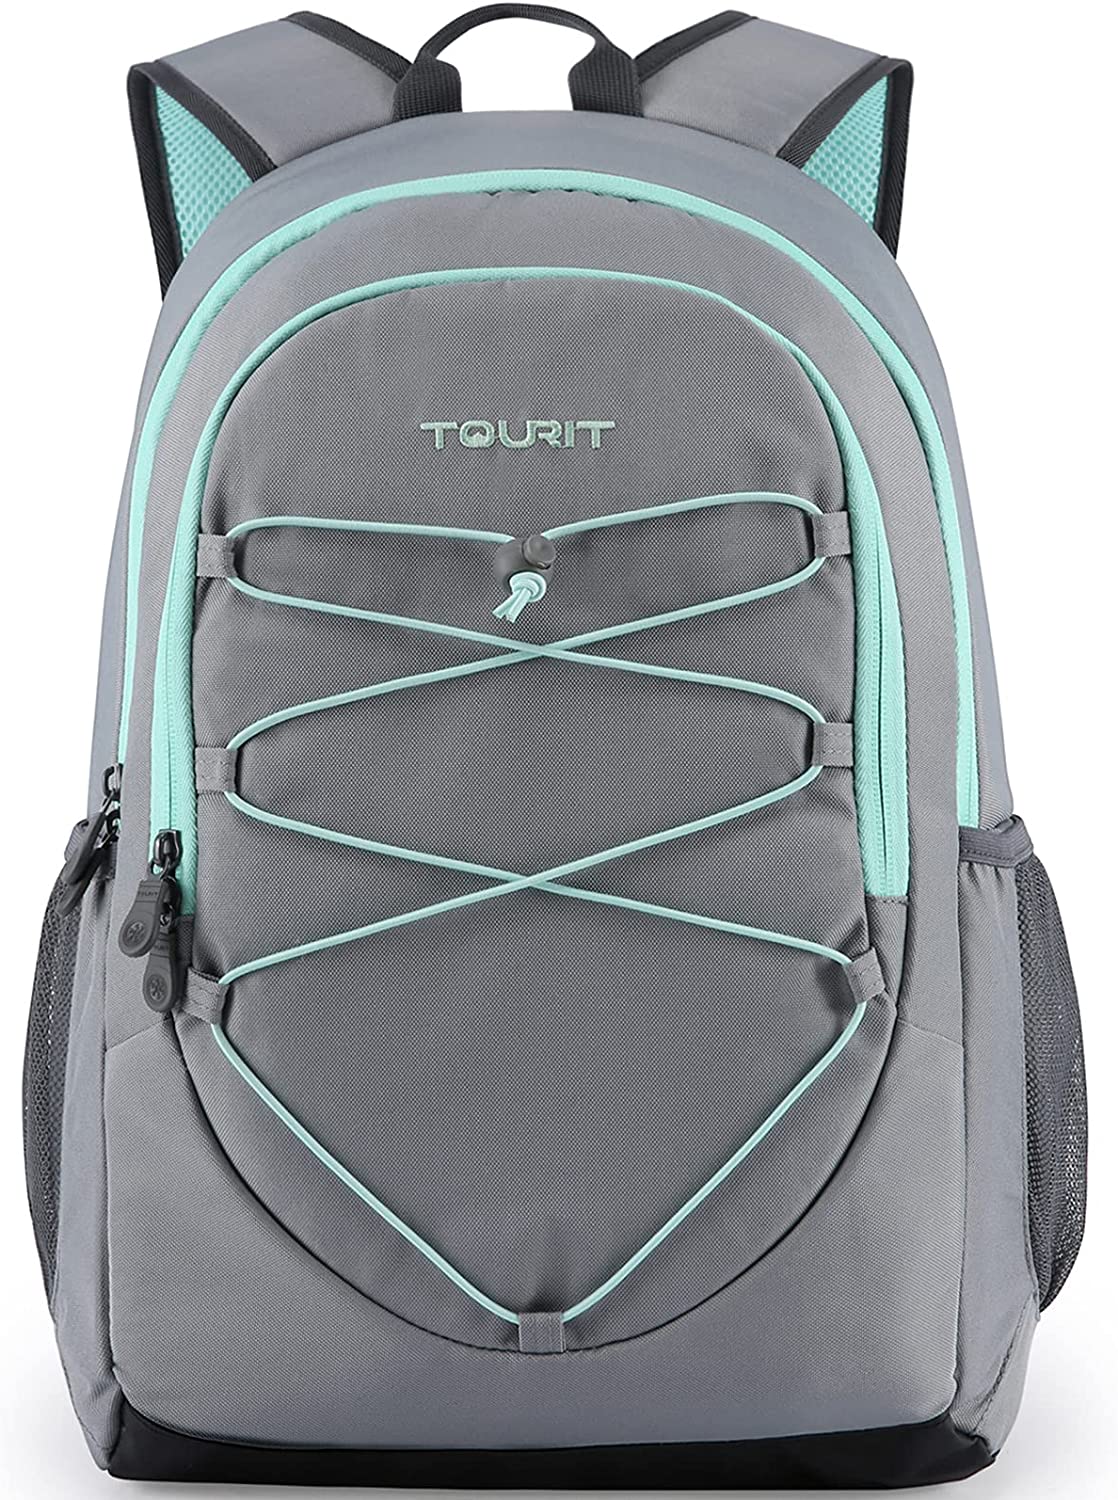 https://www.dontwasteyourmoney.com/wp-content/uploads/2020/07/tourit-lightweight-leakproof-insulated-backpack-cooler.jpg